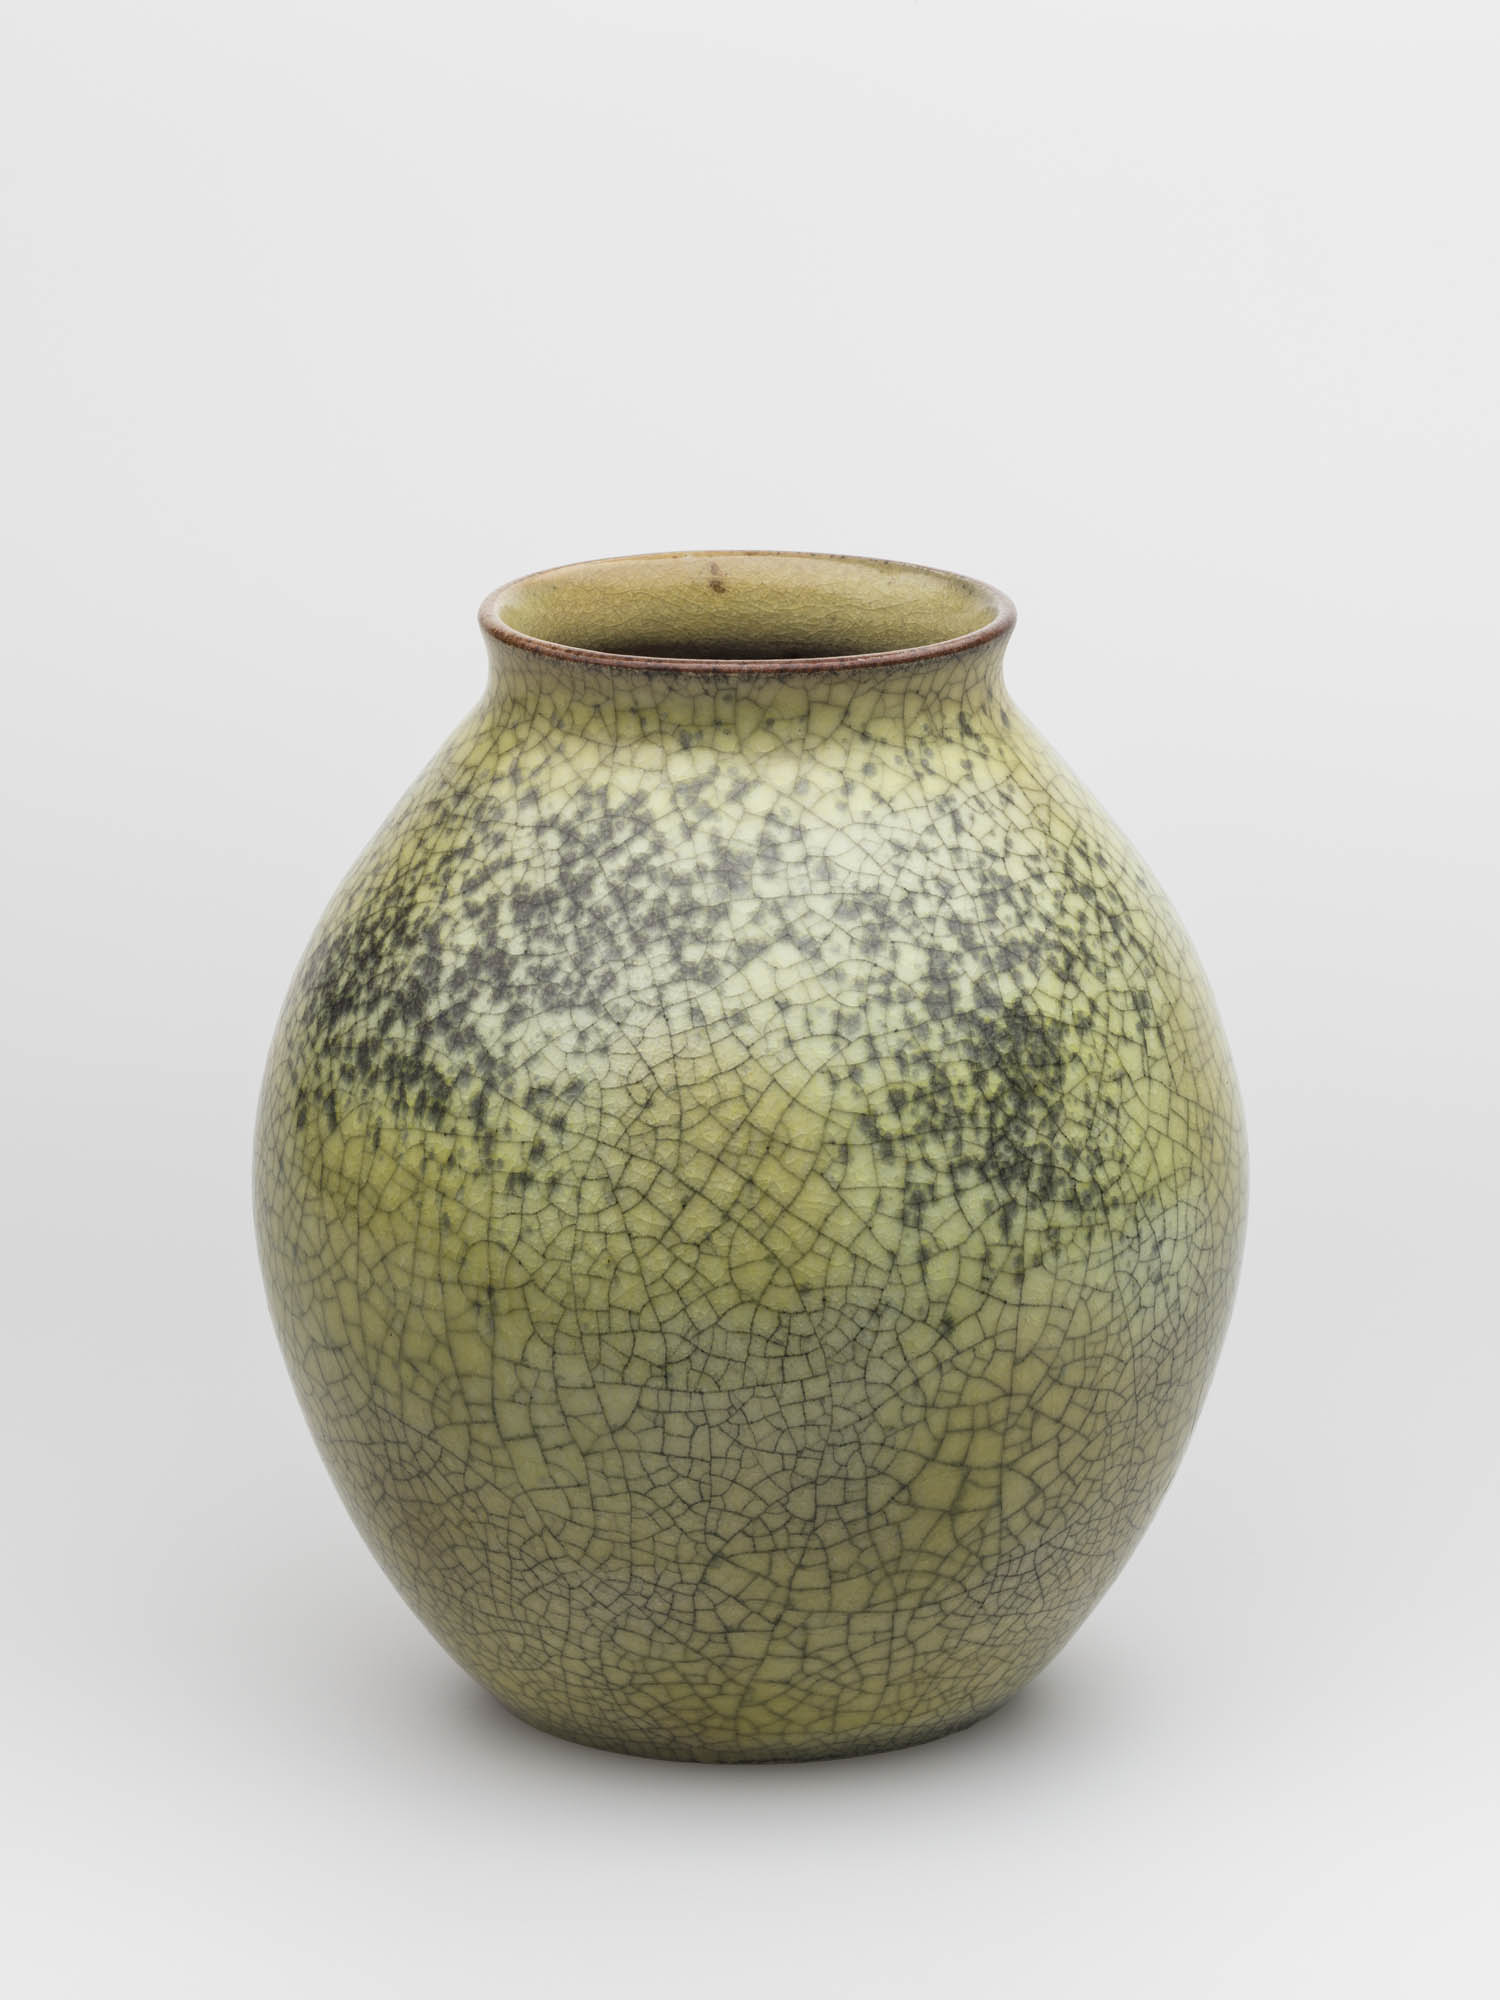 (untitled) Keramische Werkstätte Alsiko Uster Vase